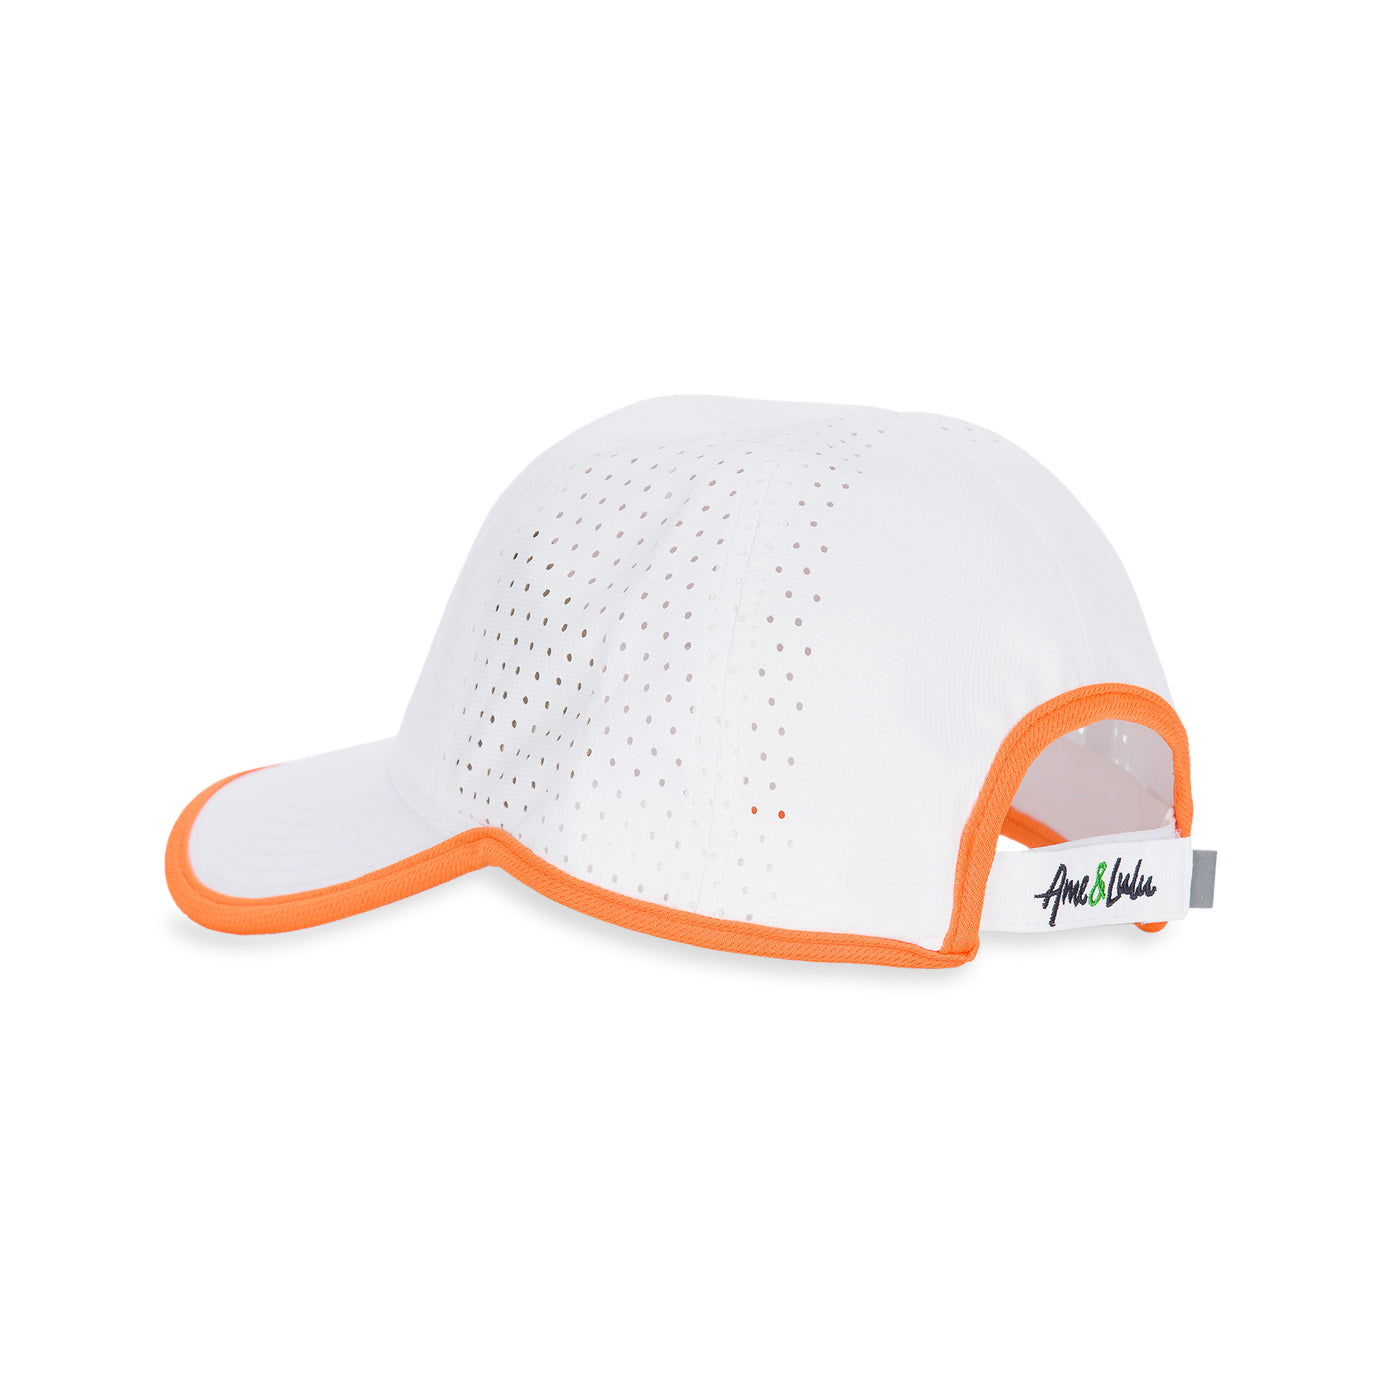 side view of white sport hat with orange trim.